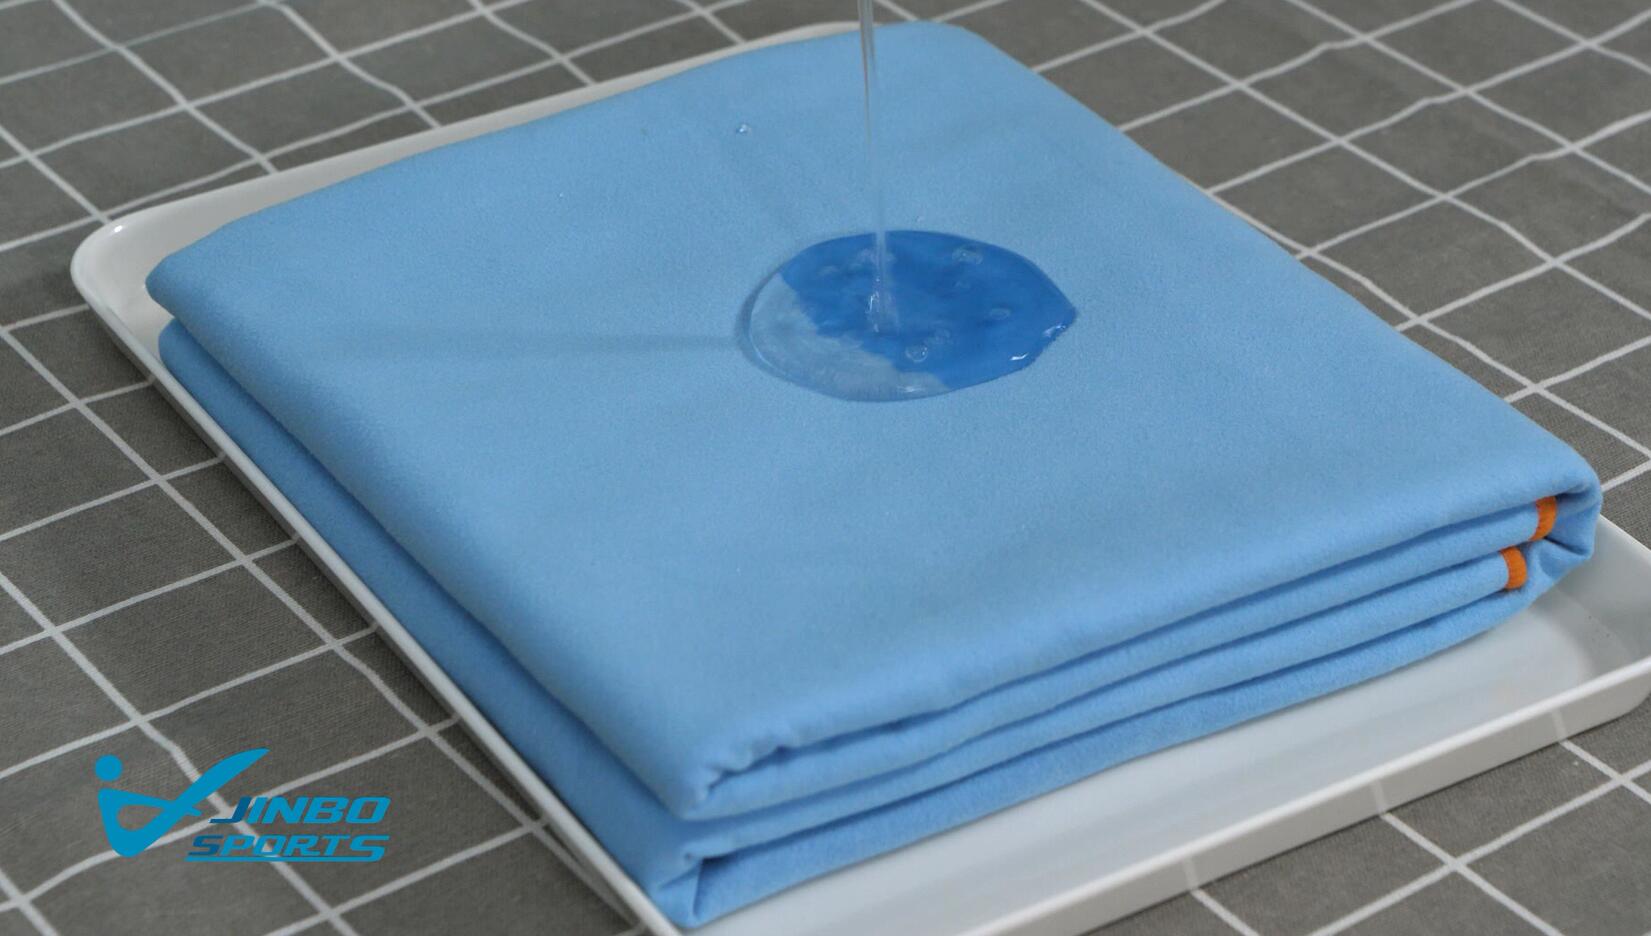 Advantage of the microfiber towel